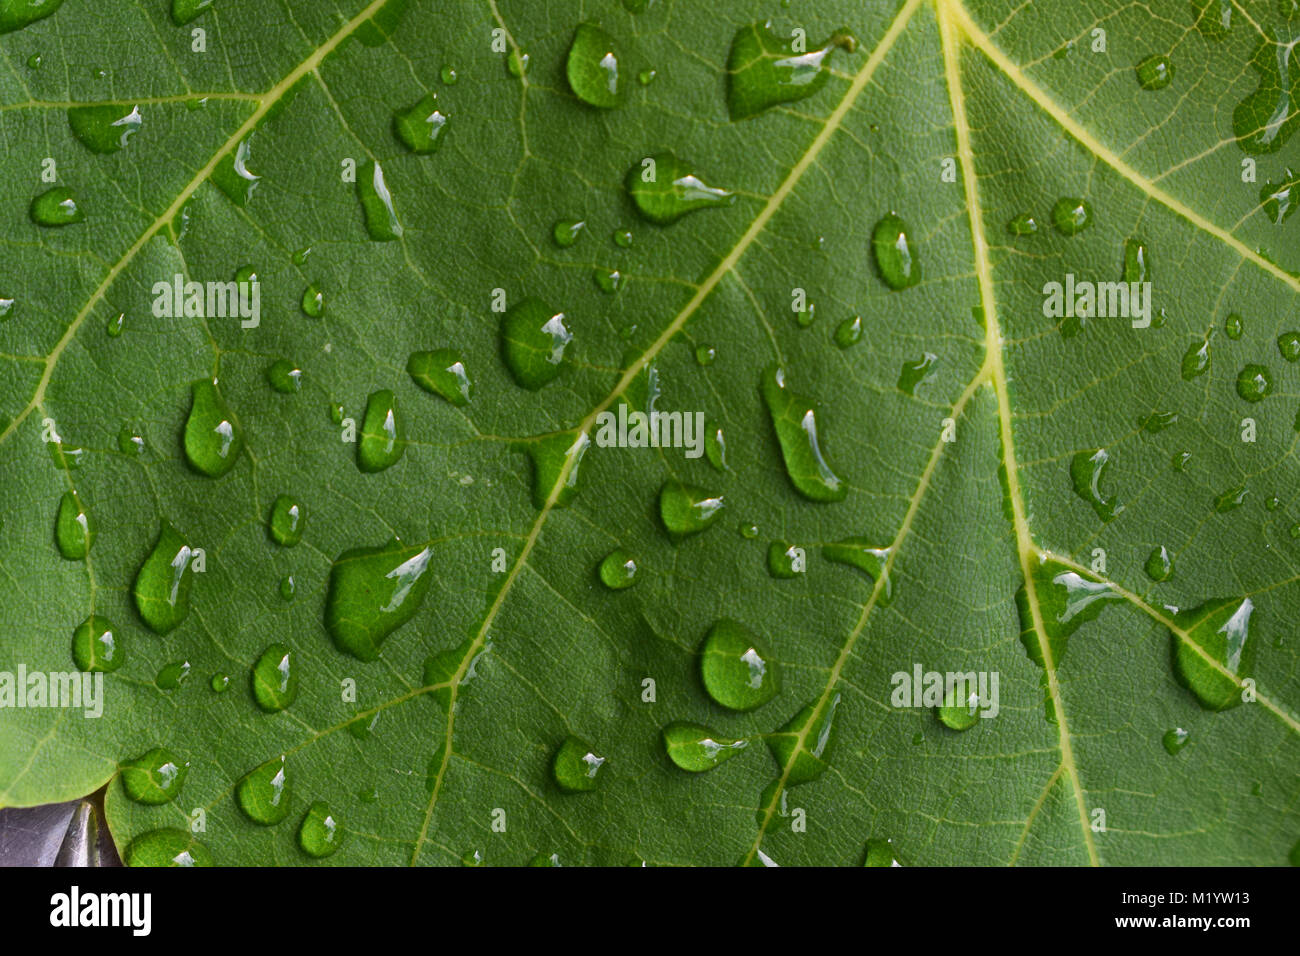 Raindrops on a leaf Stock Photo